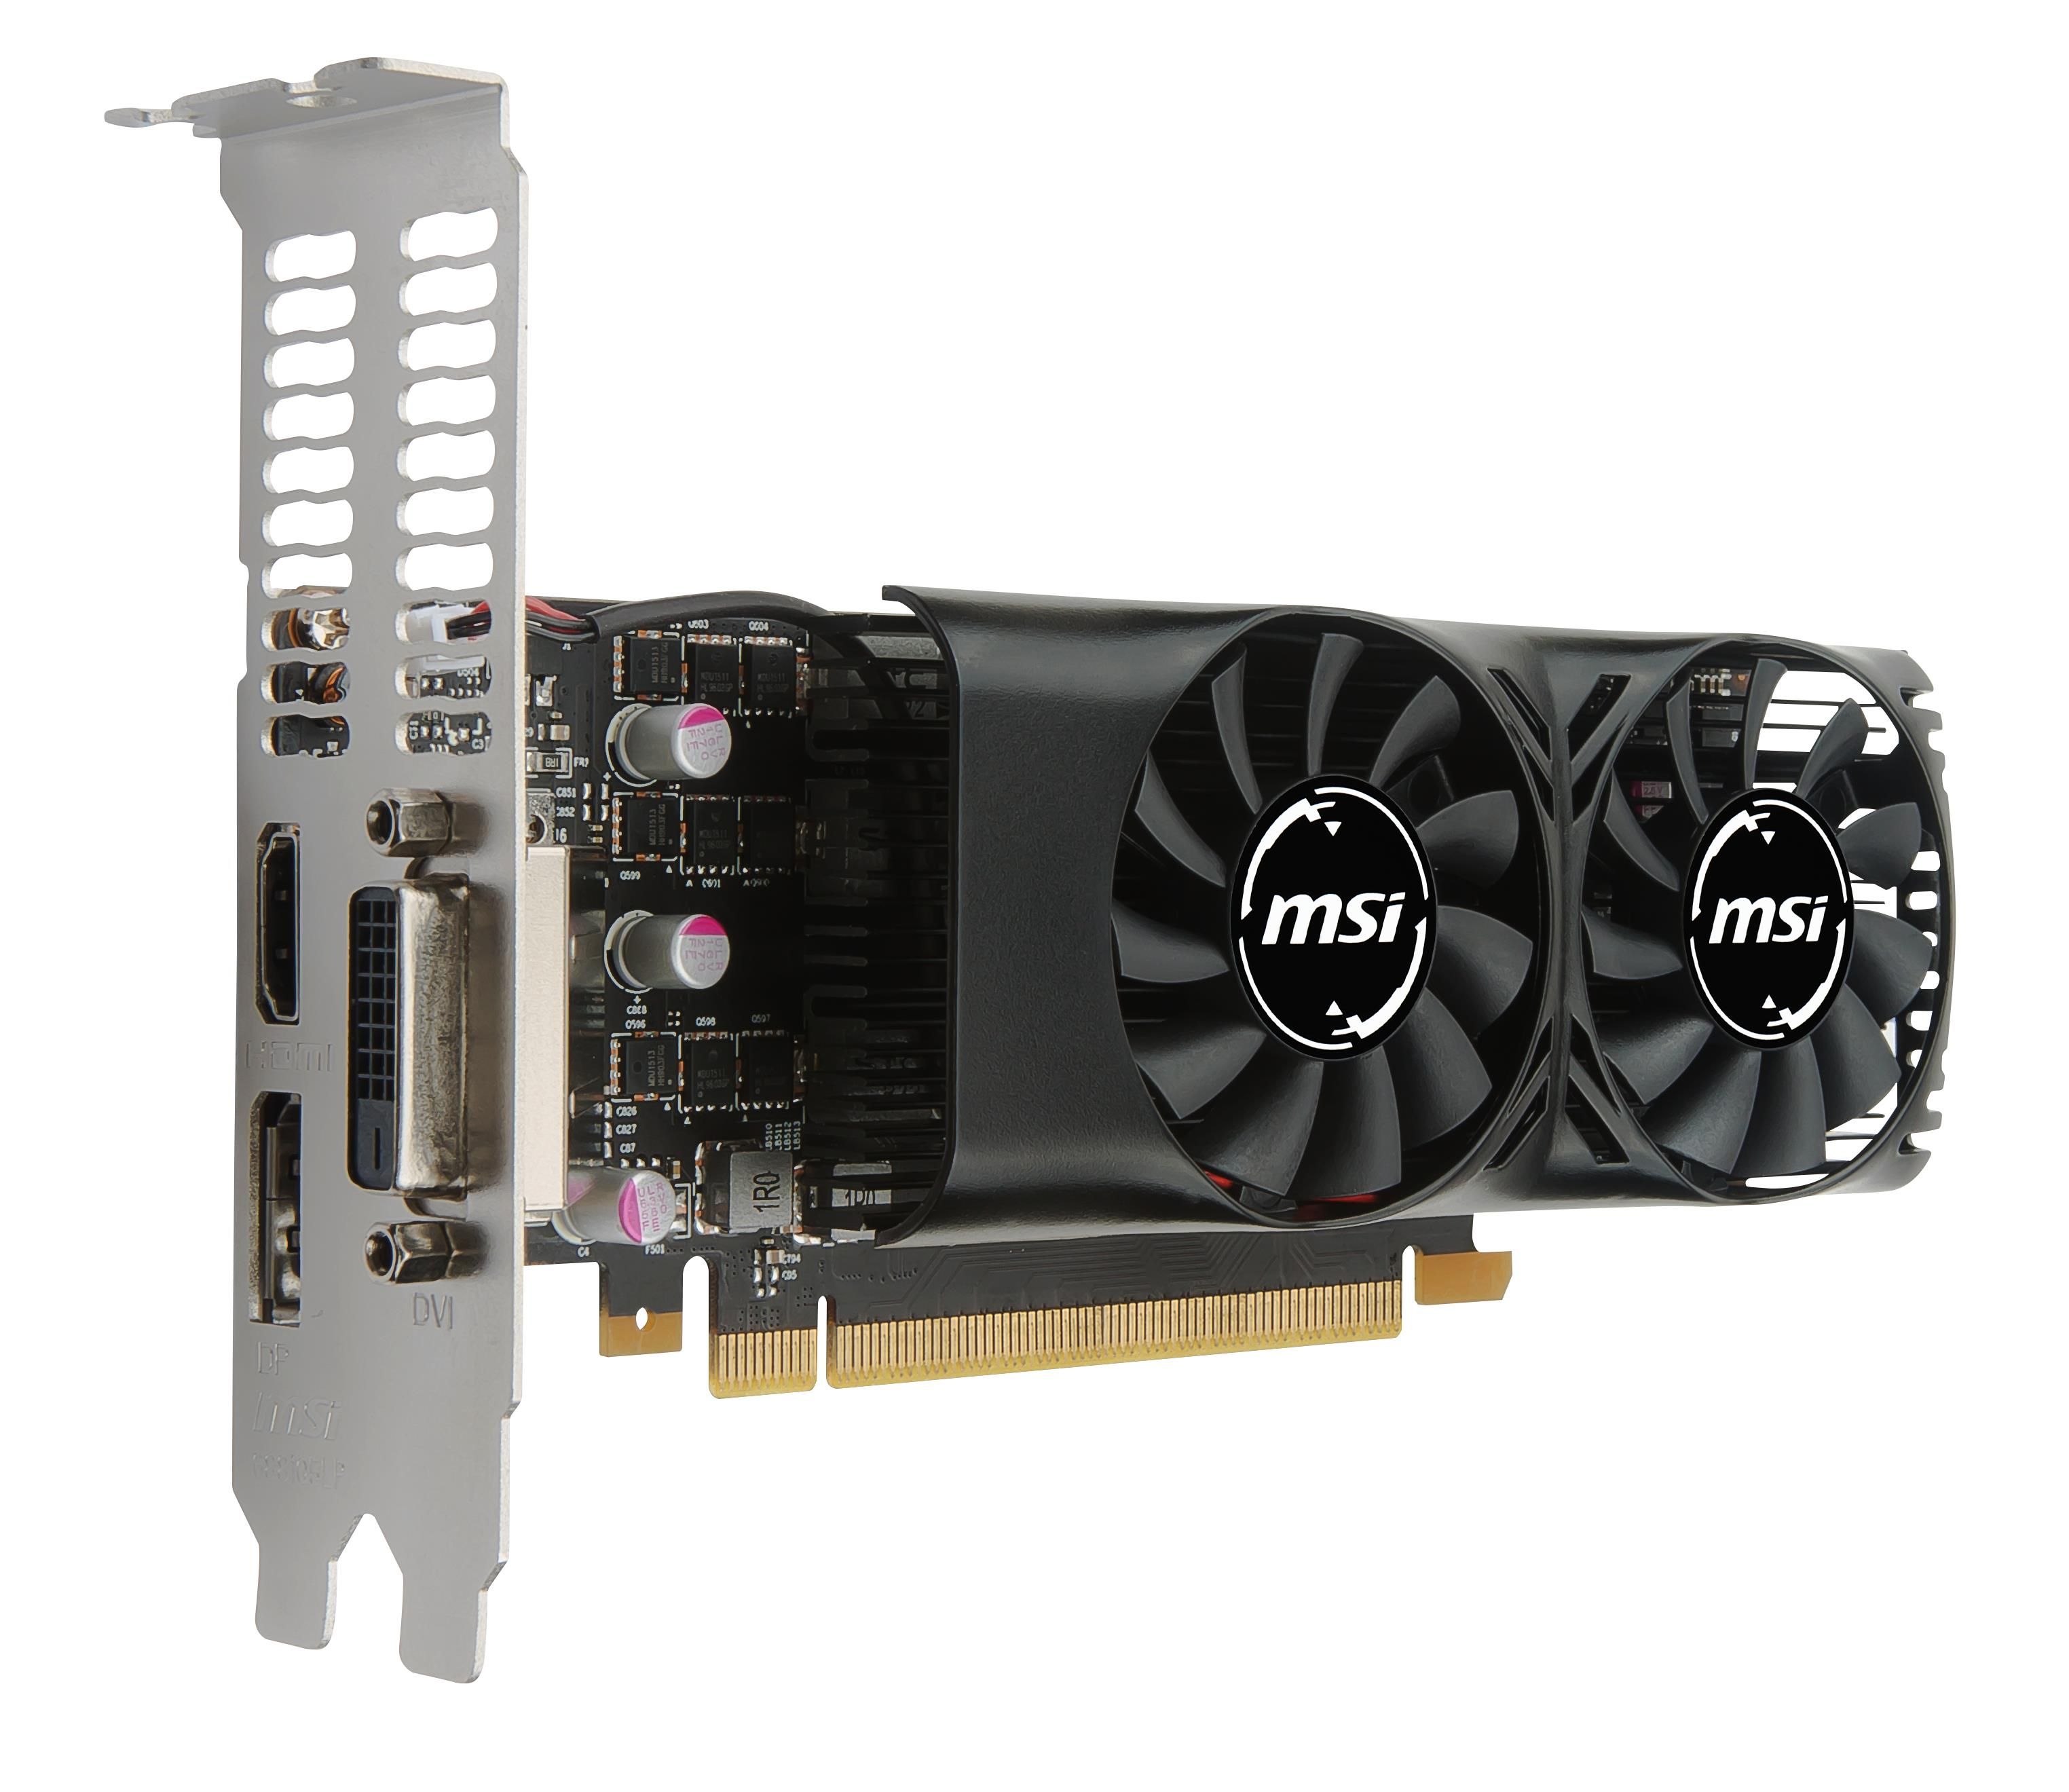 MSI GeForce GTX 1050